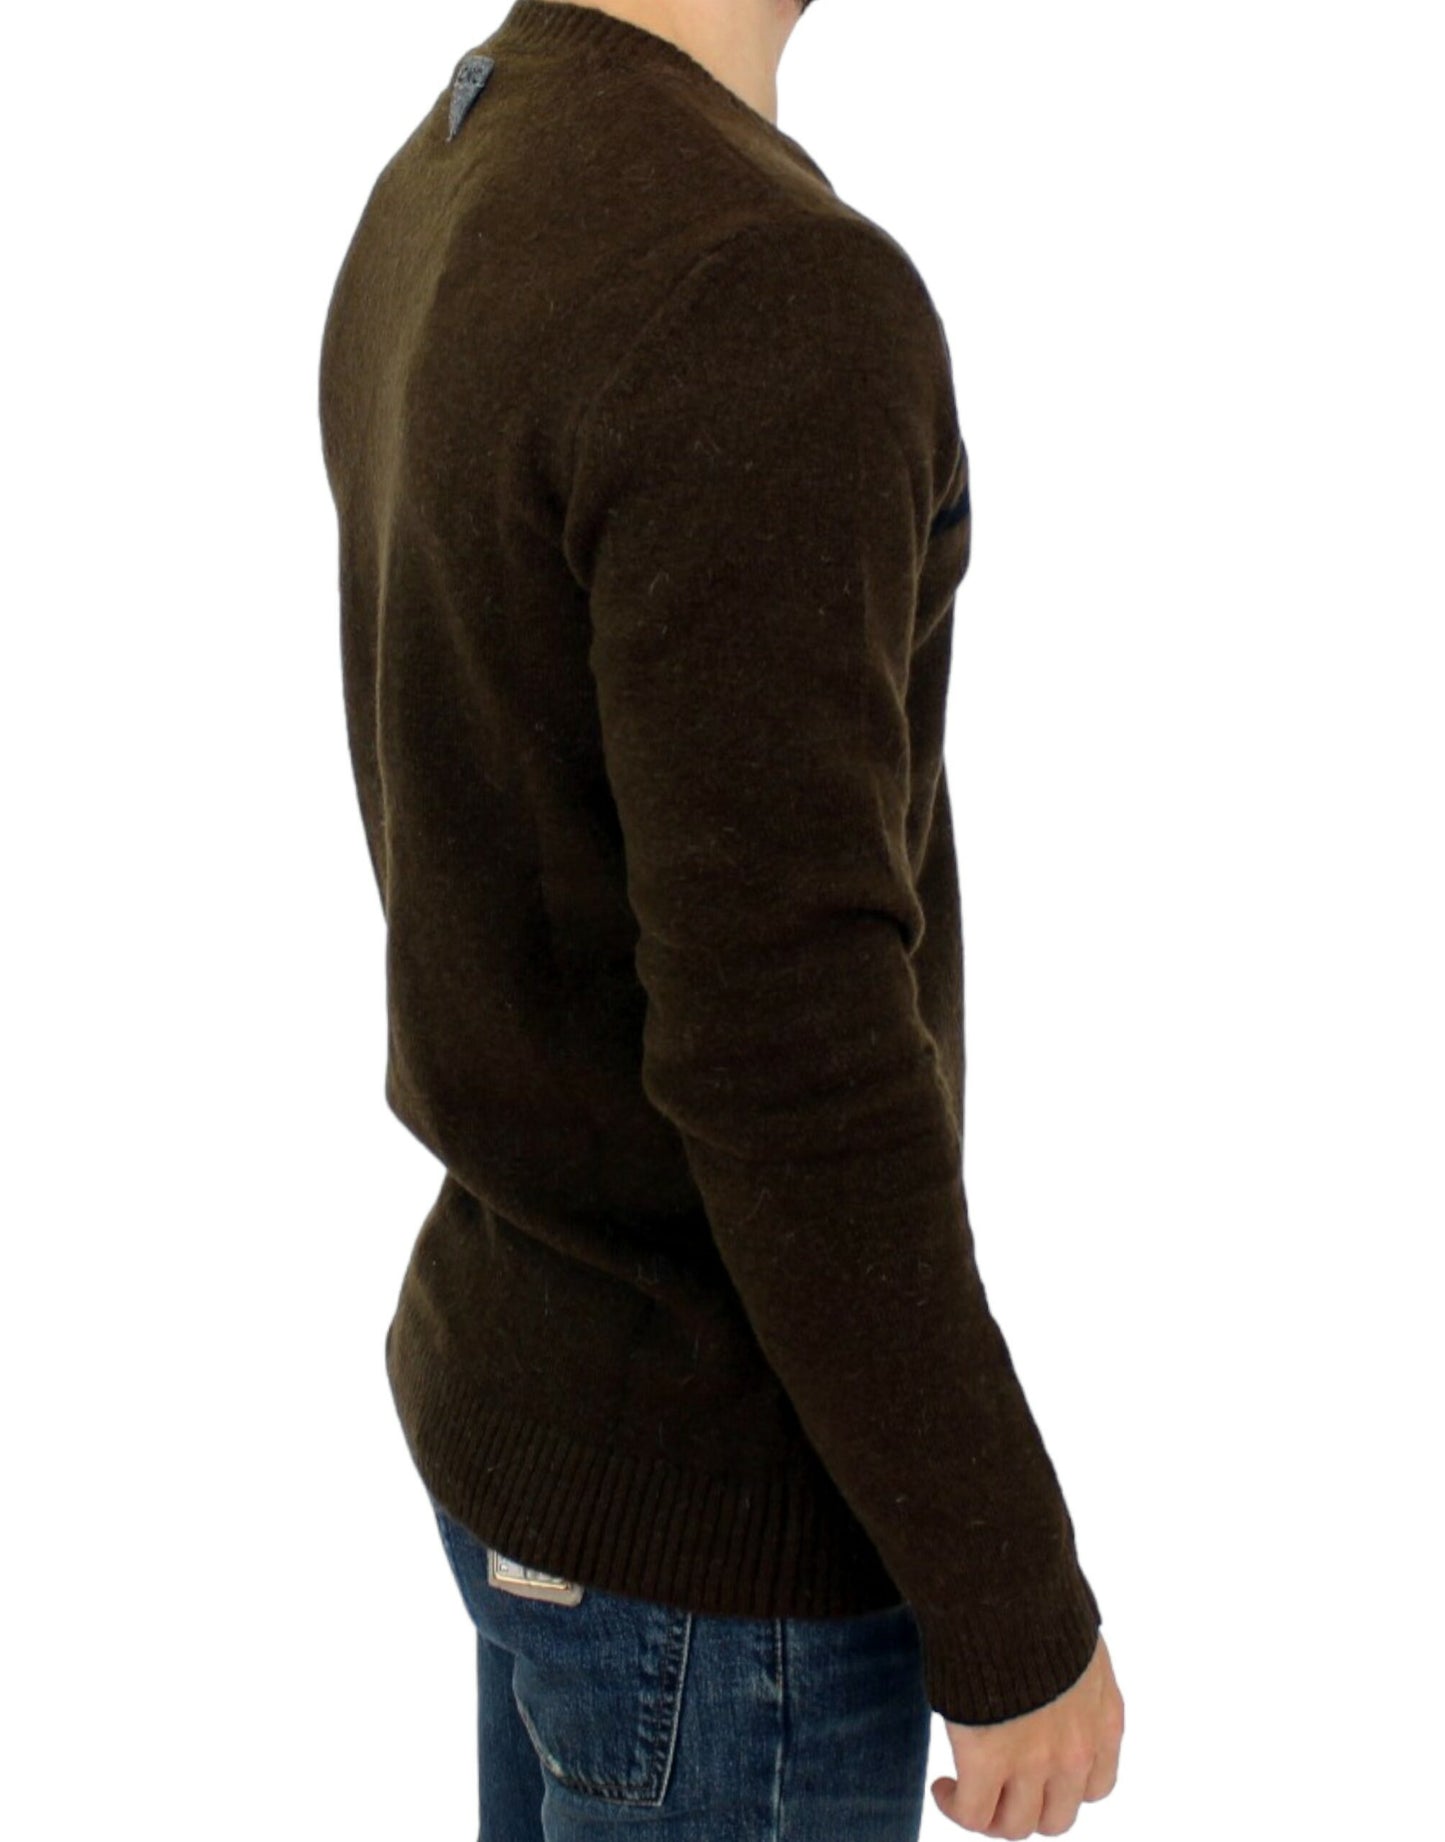 Brown striped crewneck sweater